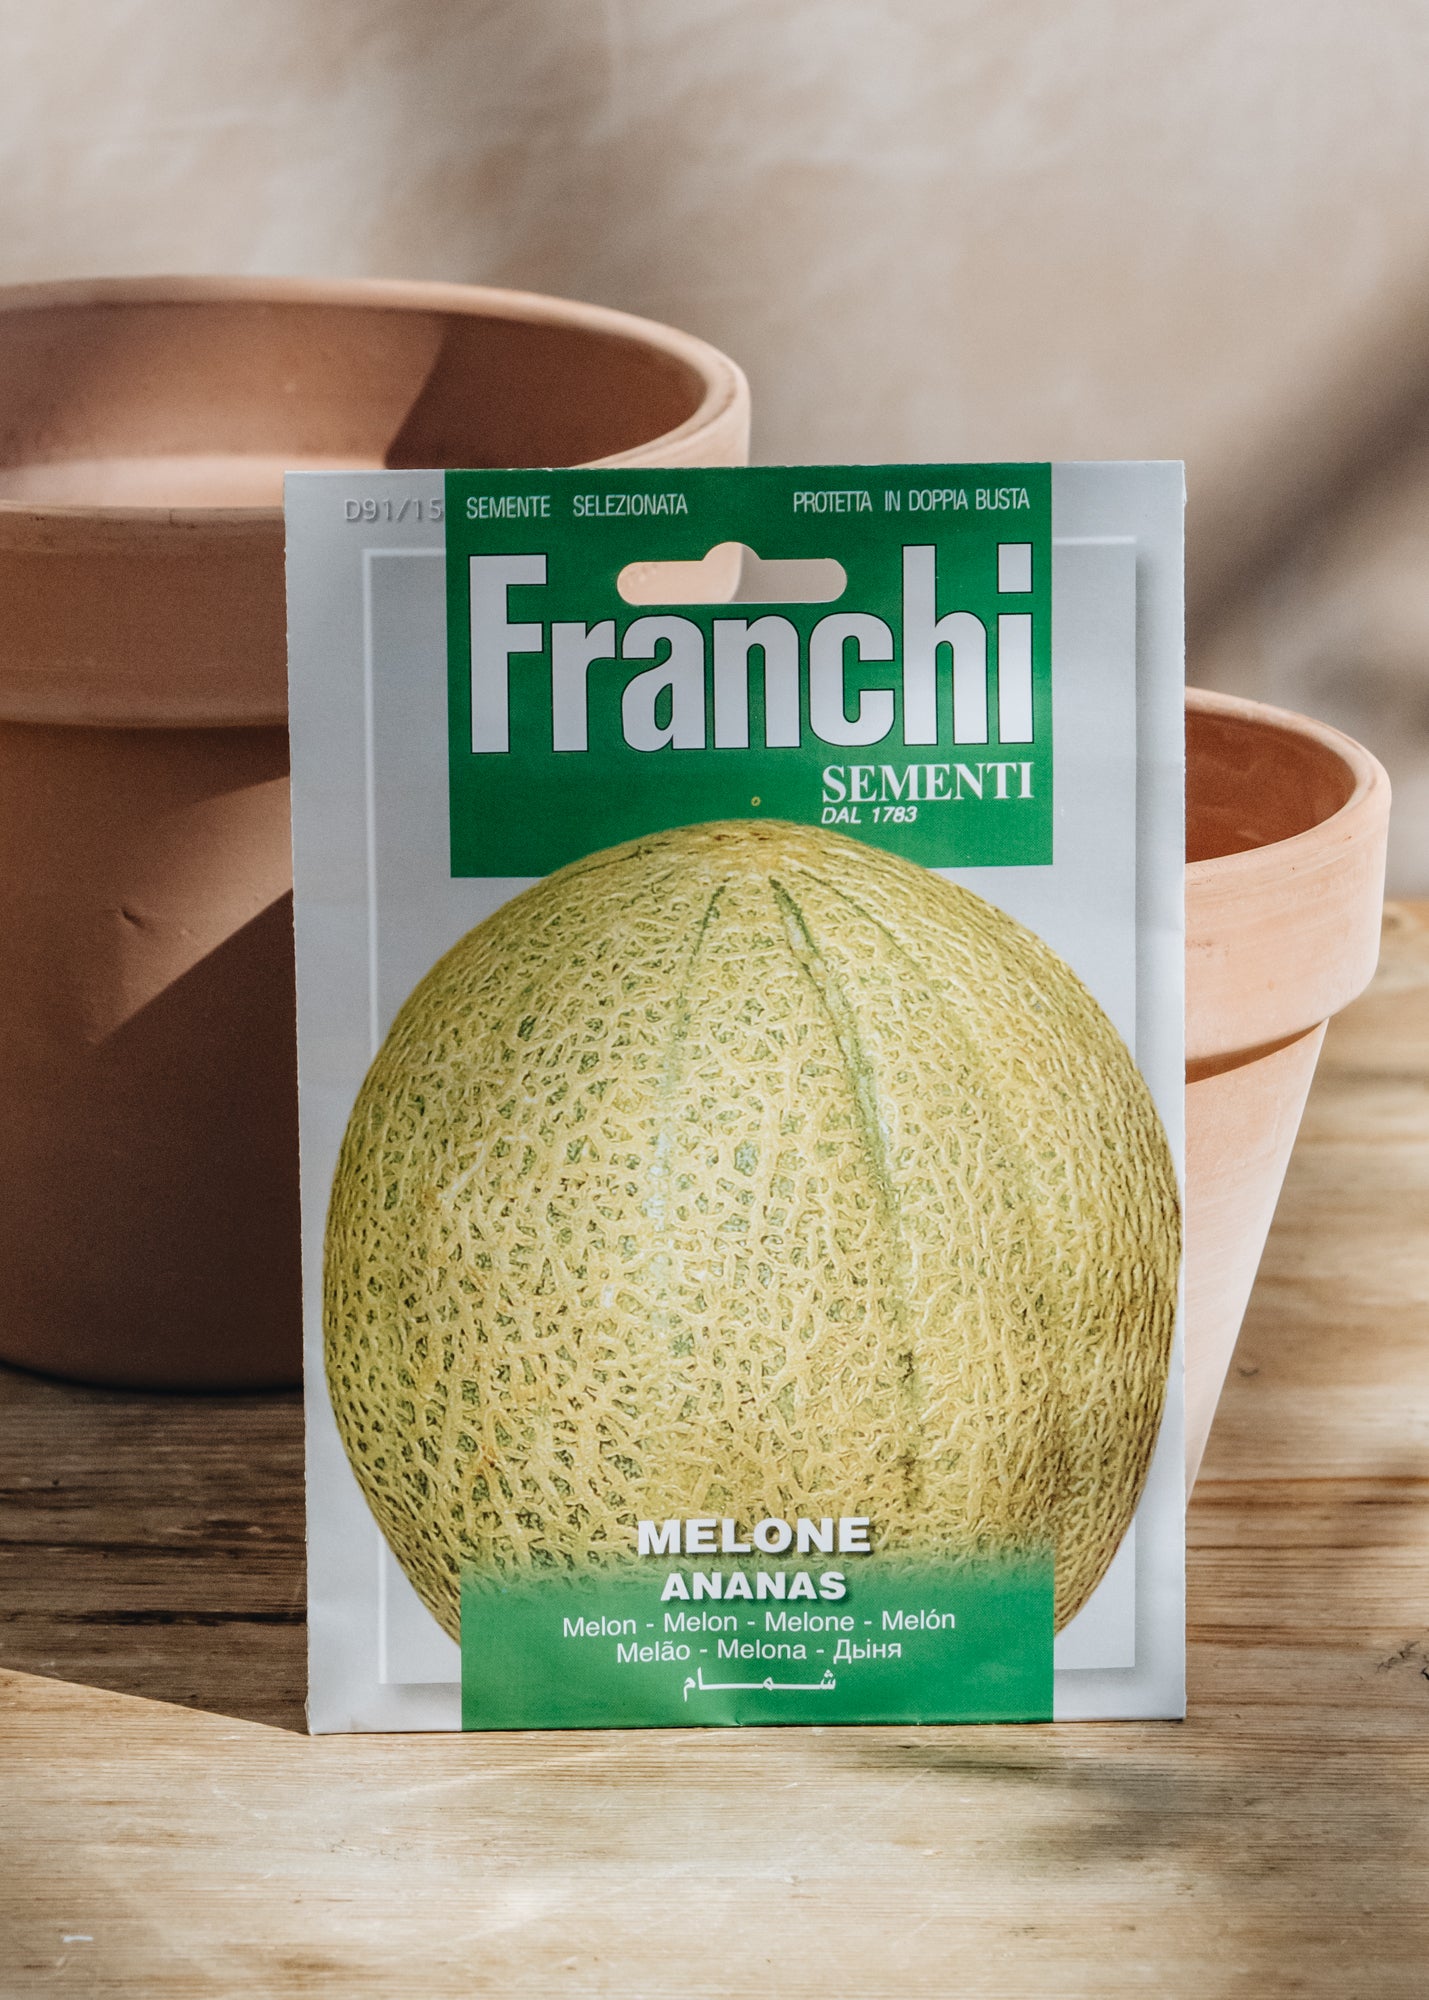 Franchi Melon 'Ananas' Seeds